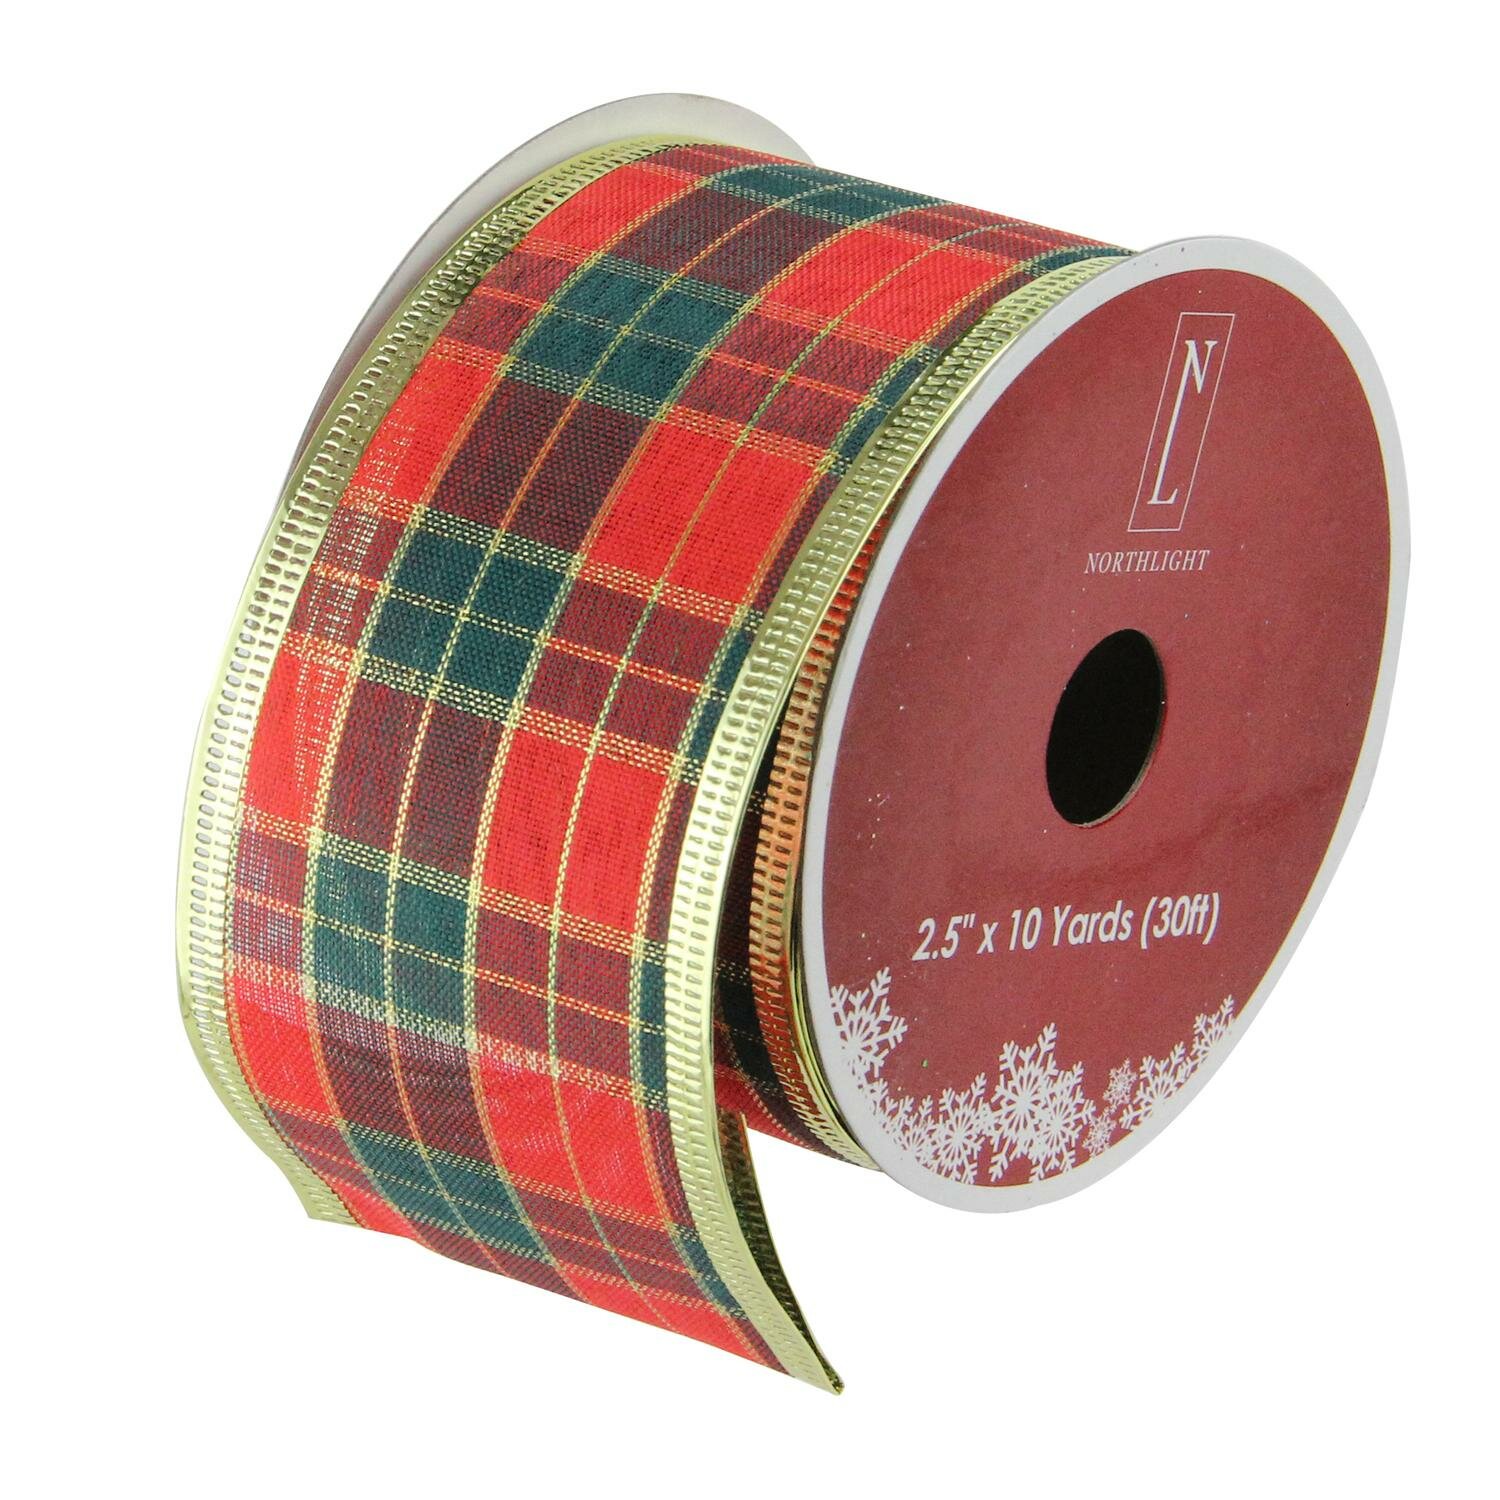 2.5” x 10 Yard Gold on Red/Beige Stripes Ribbon